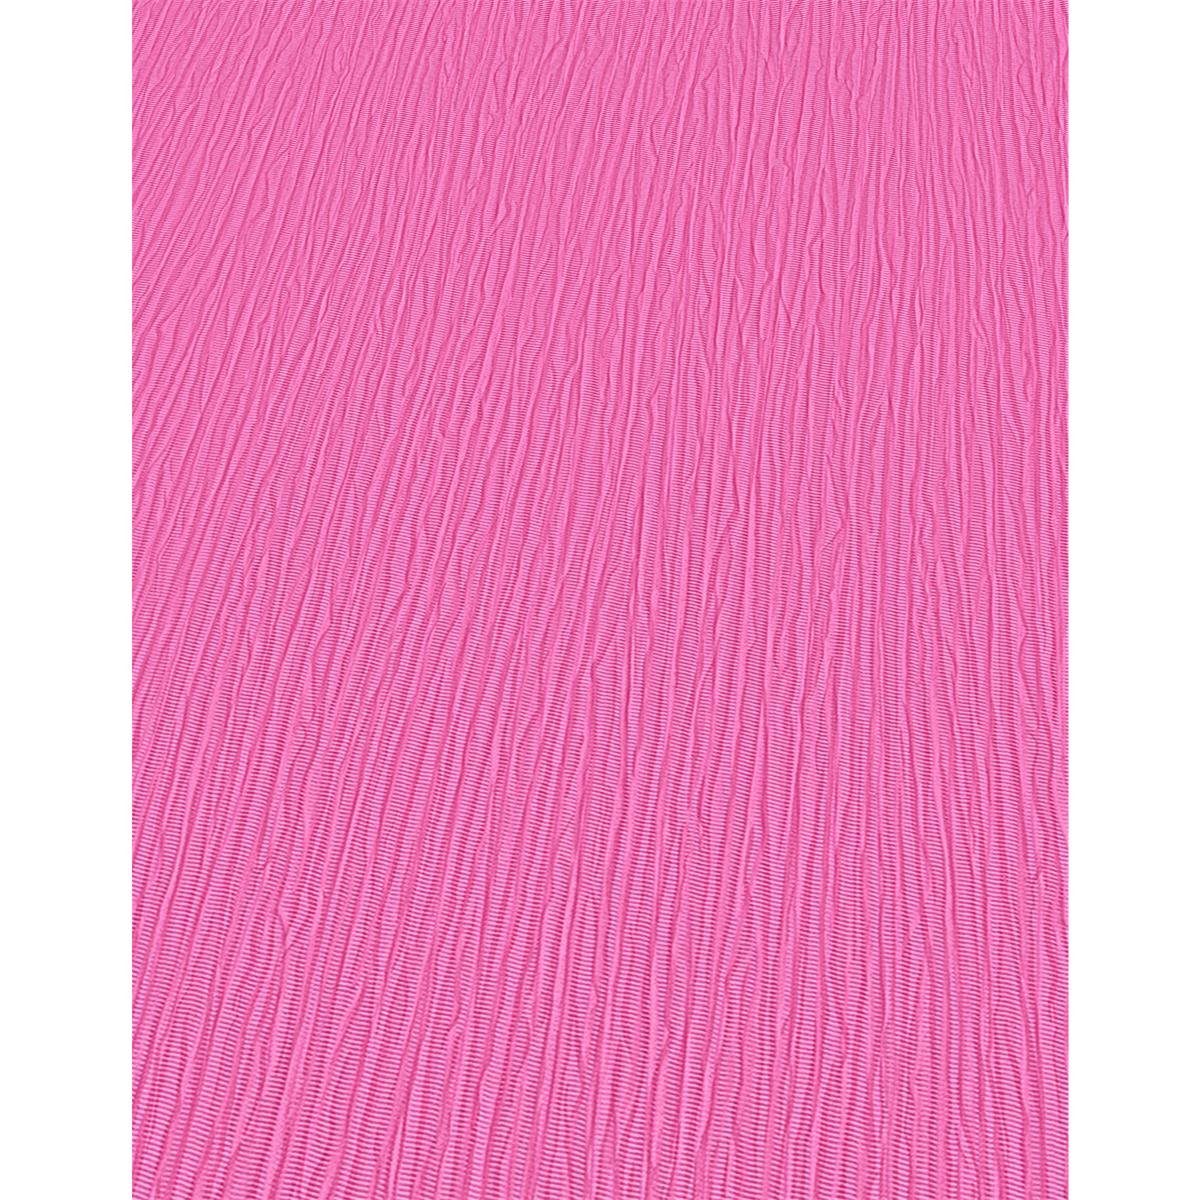 abziehbar, 30002-17, schwer entflammbar, - Erismann Vliestapete Papillon pink, Vliestapete Erismann waschbeständig, trocken Lichtbeständig